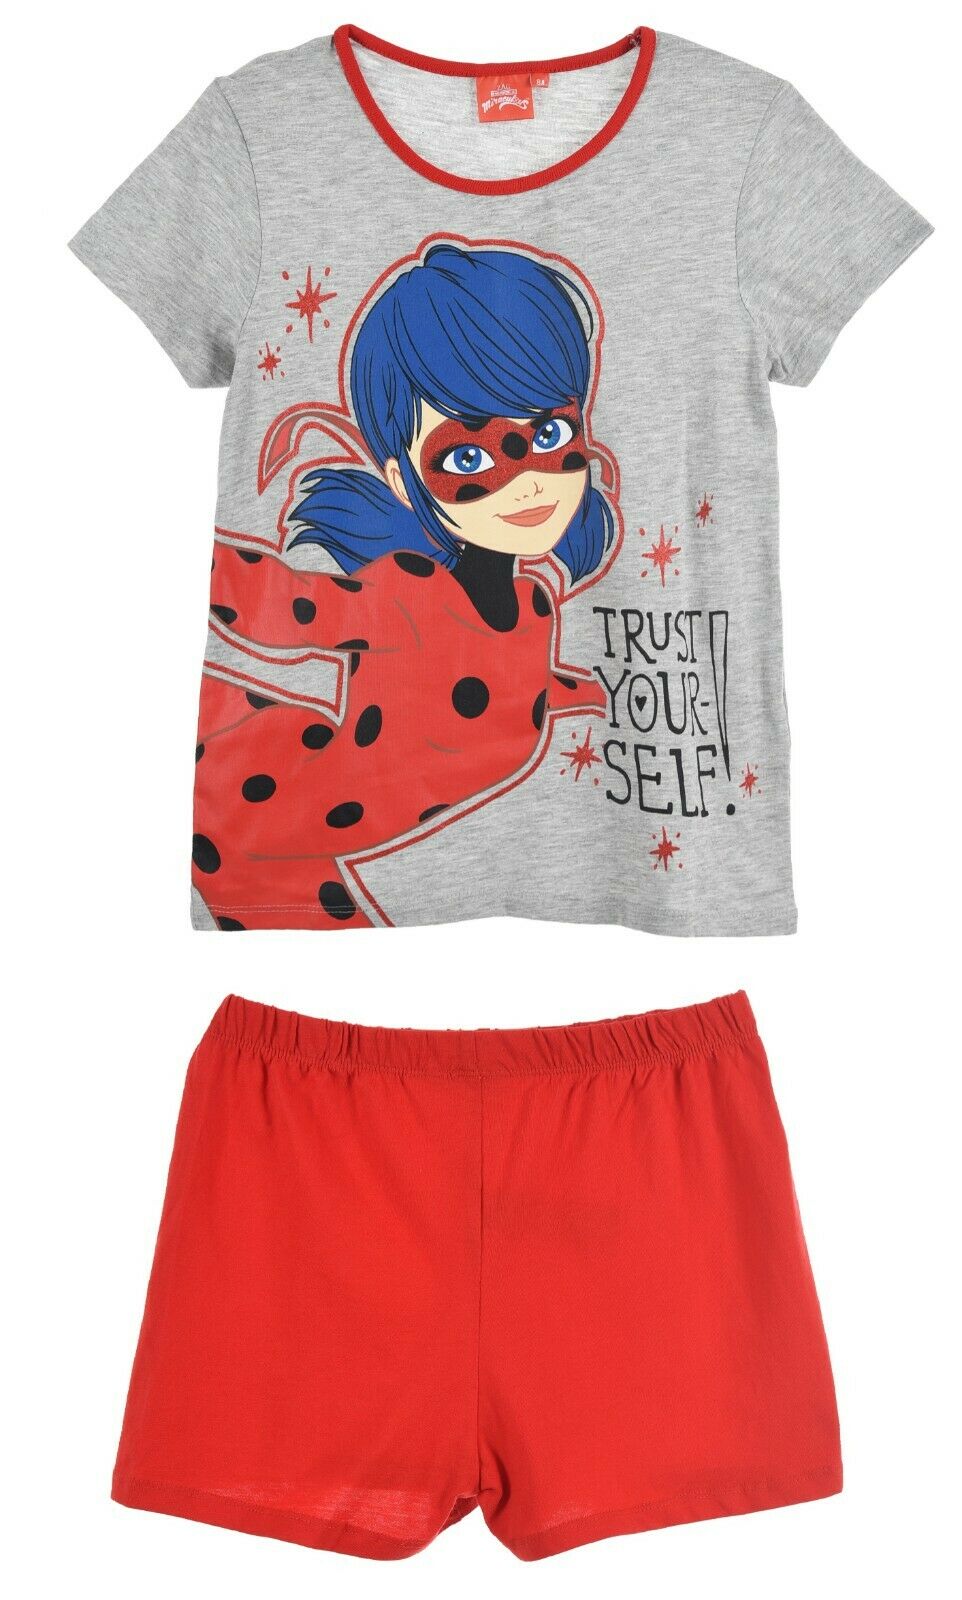 Miraculous Ladybug & Cat Noir Grey & Red Pyjama Short Set. Ages 4, 5, 6, 8, 95% Cotton & 5% Viscose